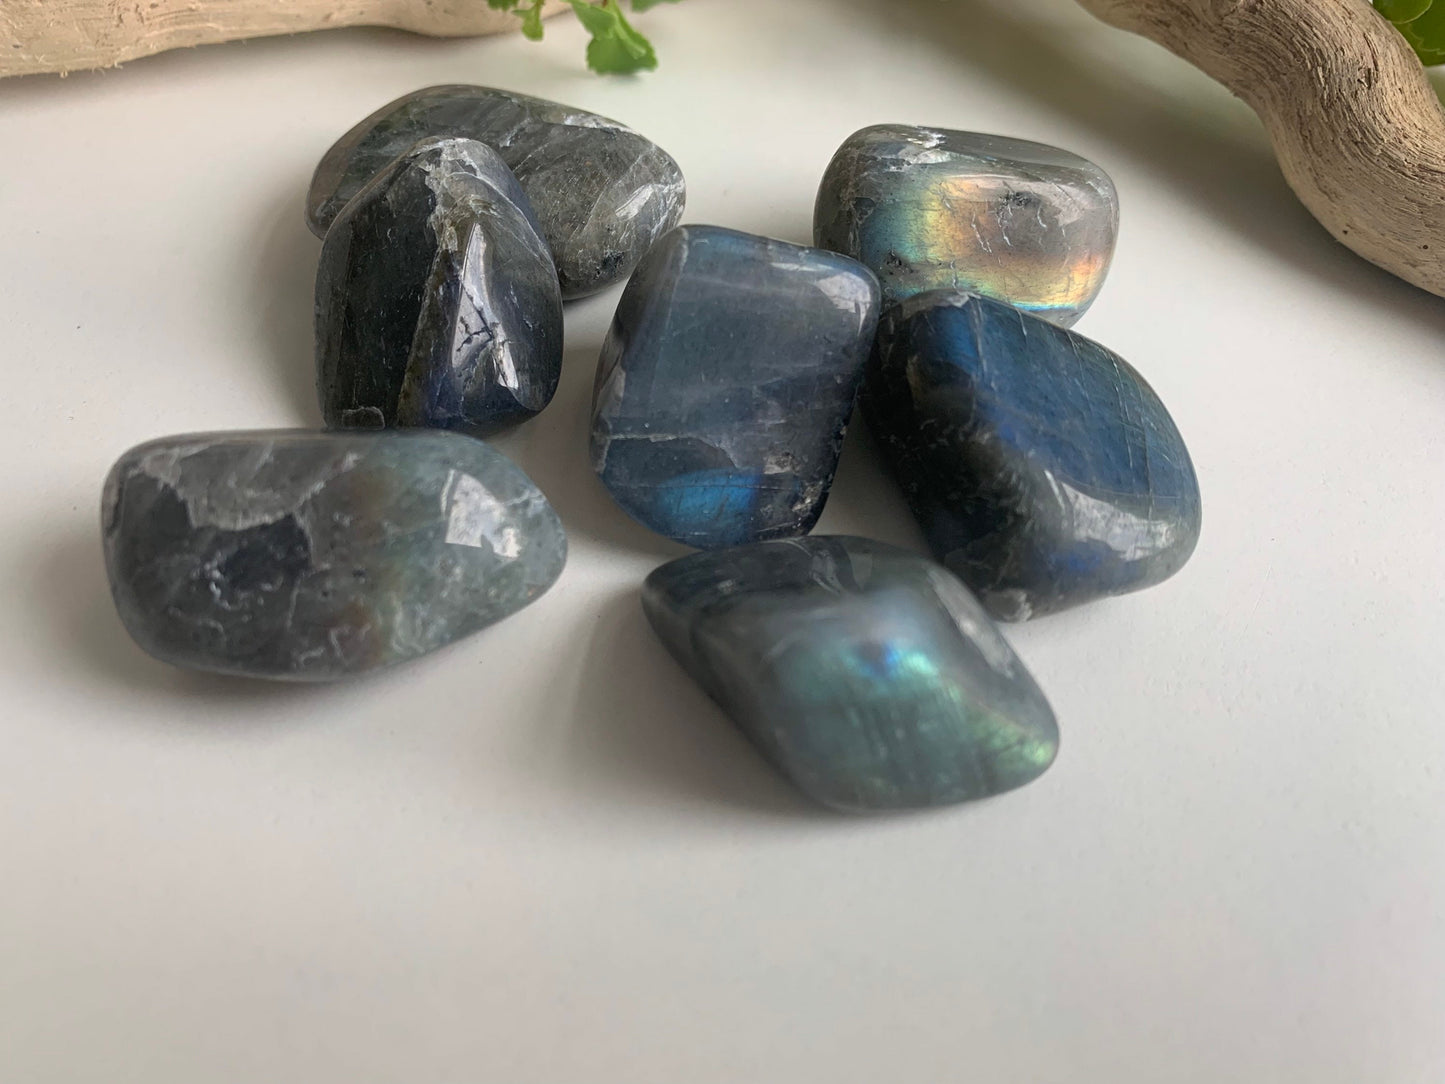 Labradorite tumbles, polished labradorite rocks, rocks and minerals, labradorite stones, flashy rocks, pocket rocks